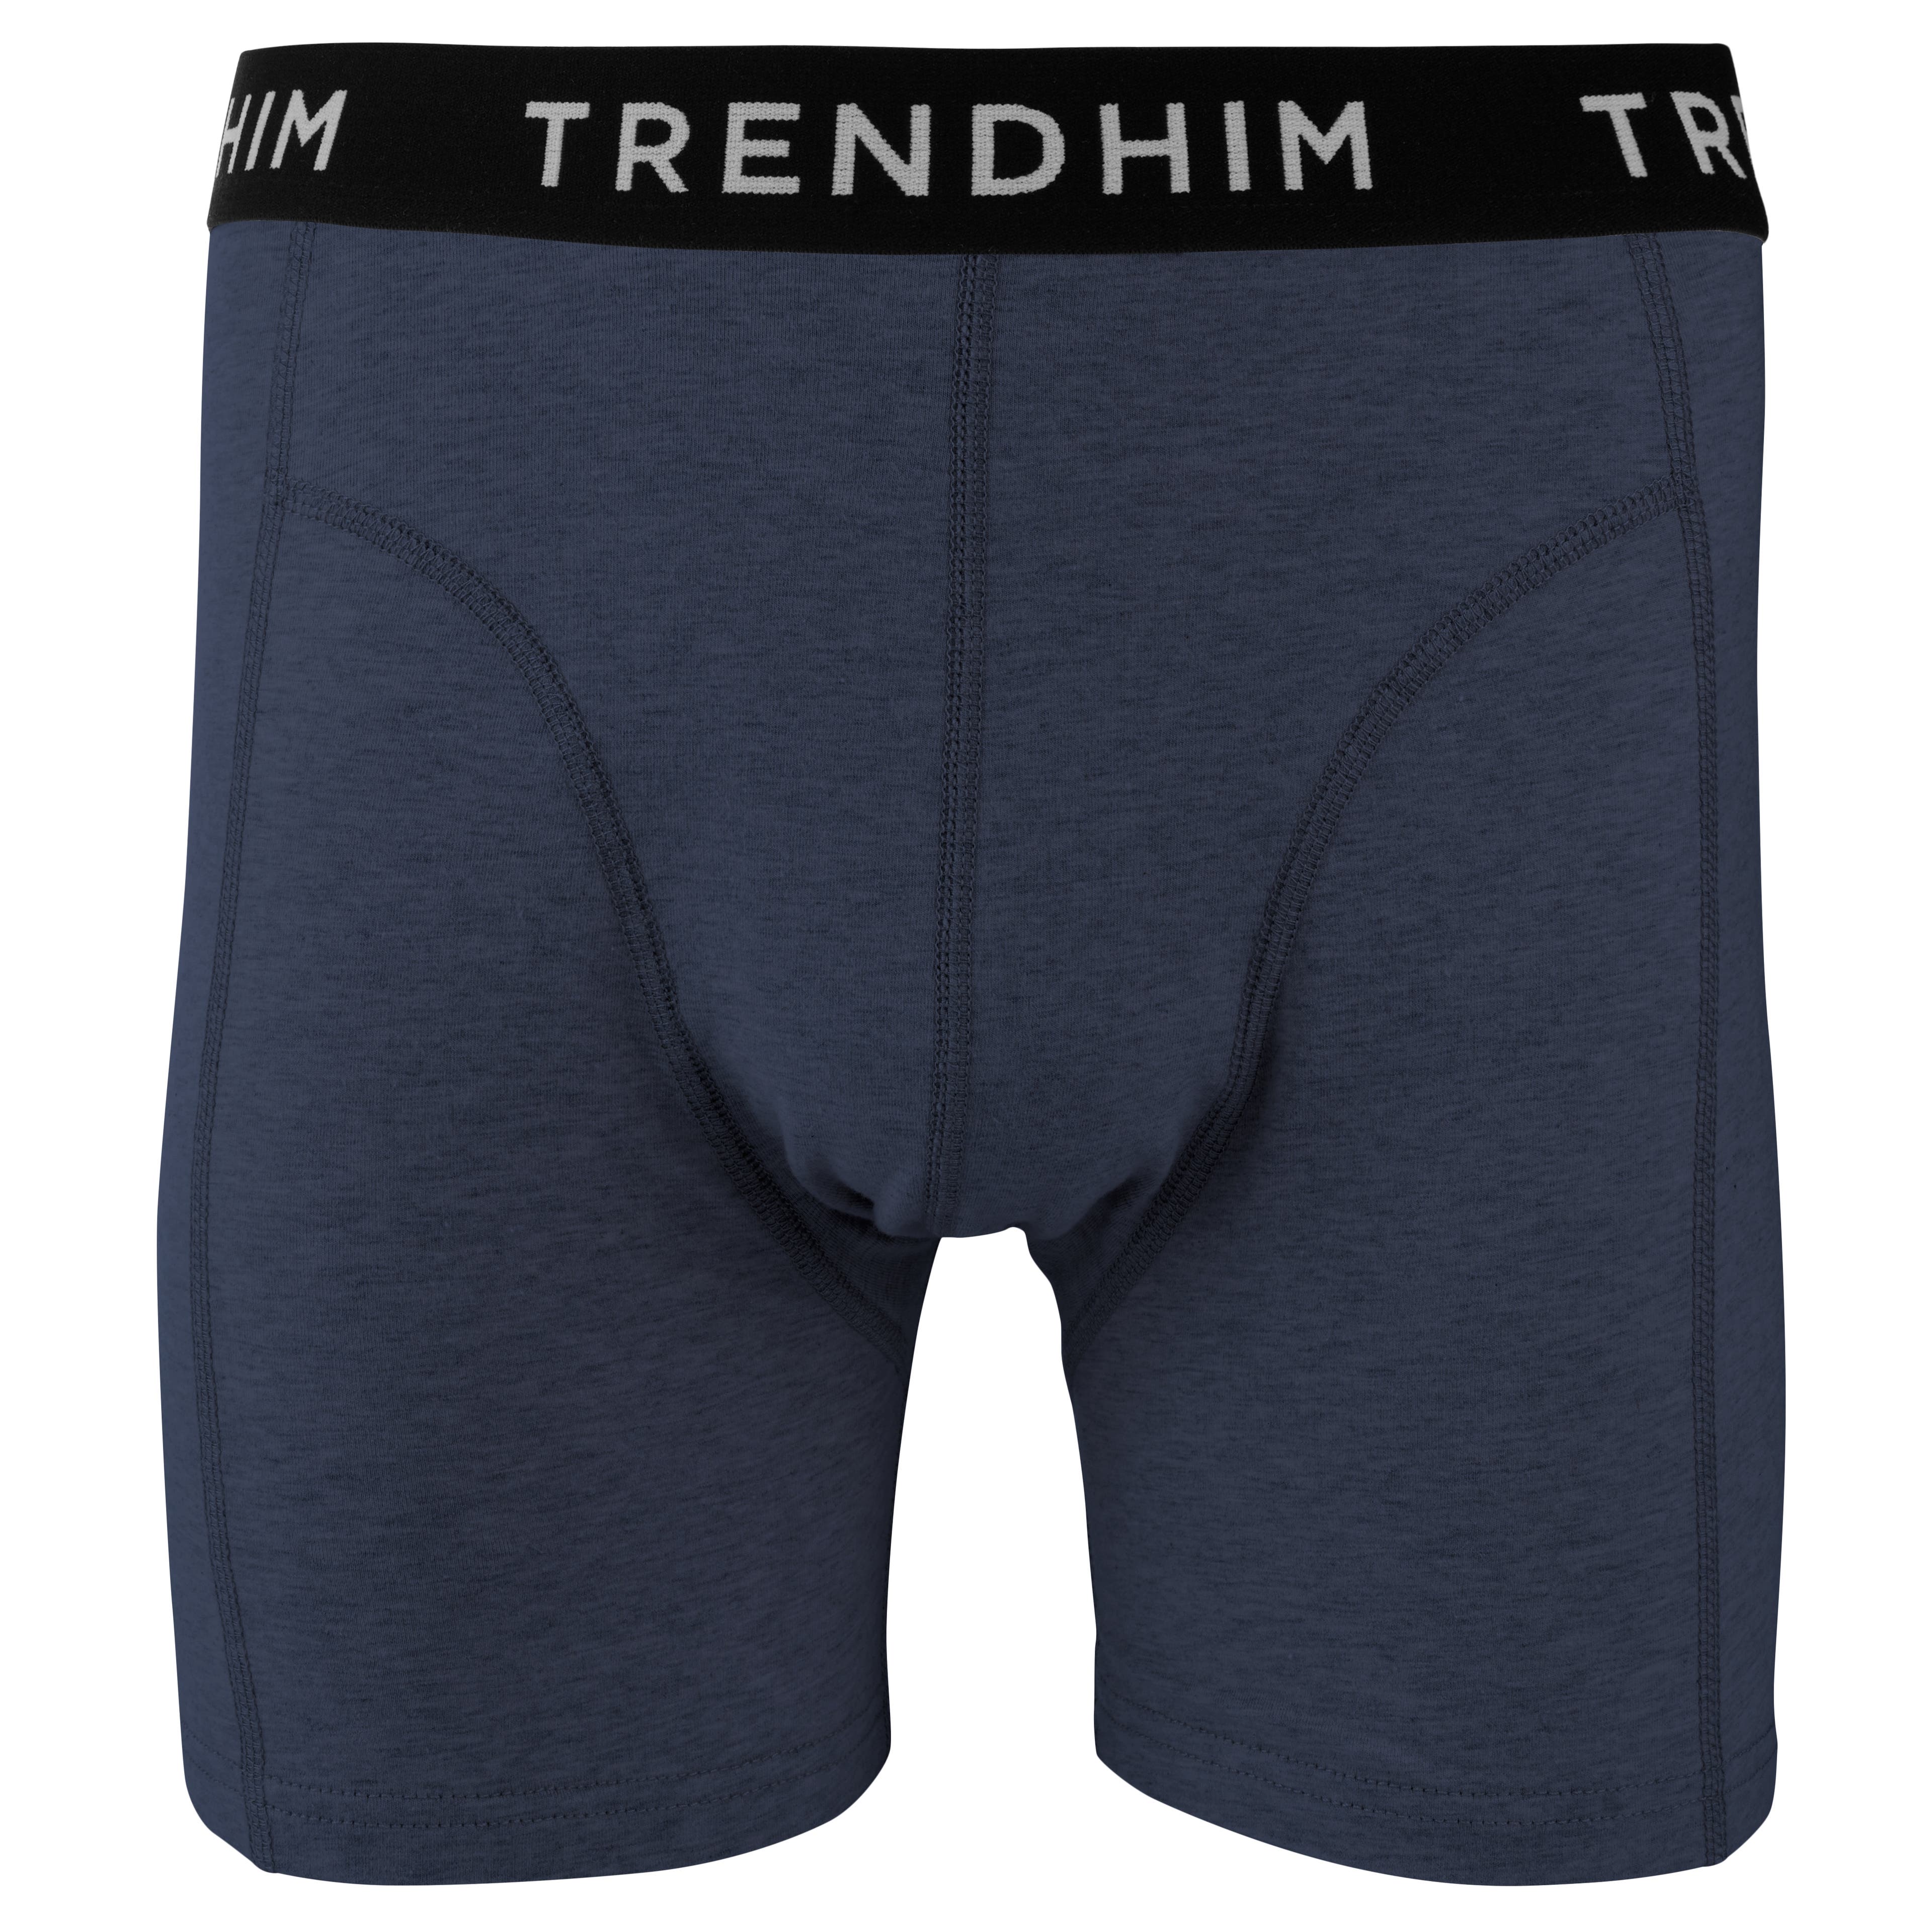 Trend SUPREME solid color men's underwear pure cotton breathable